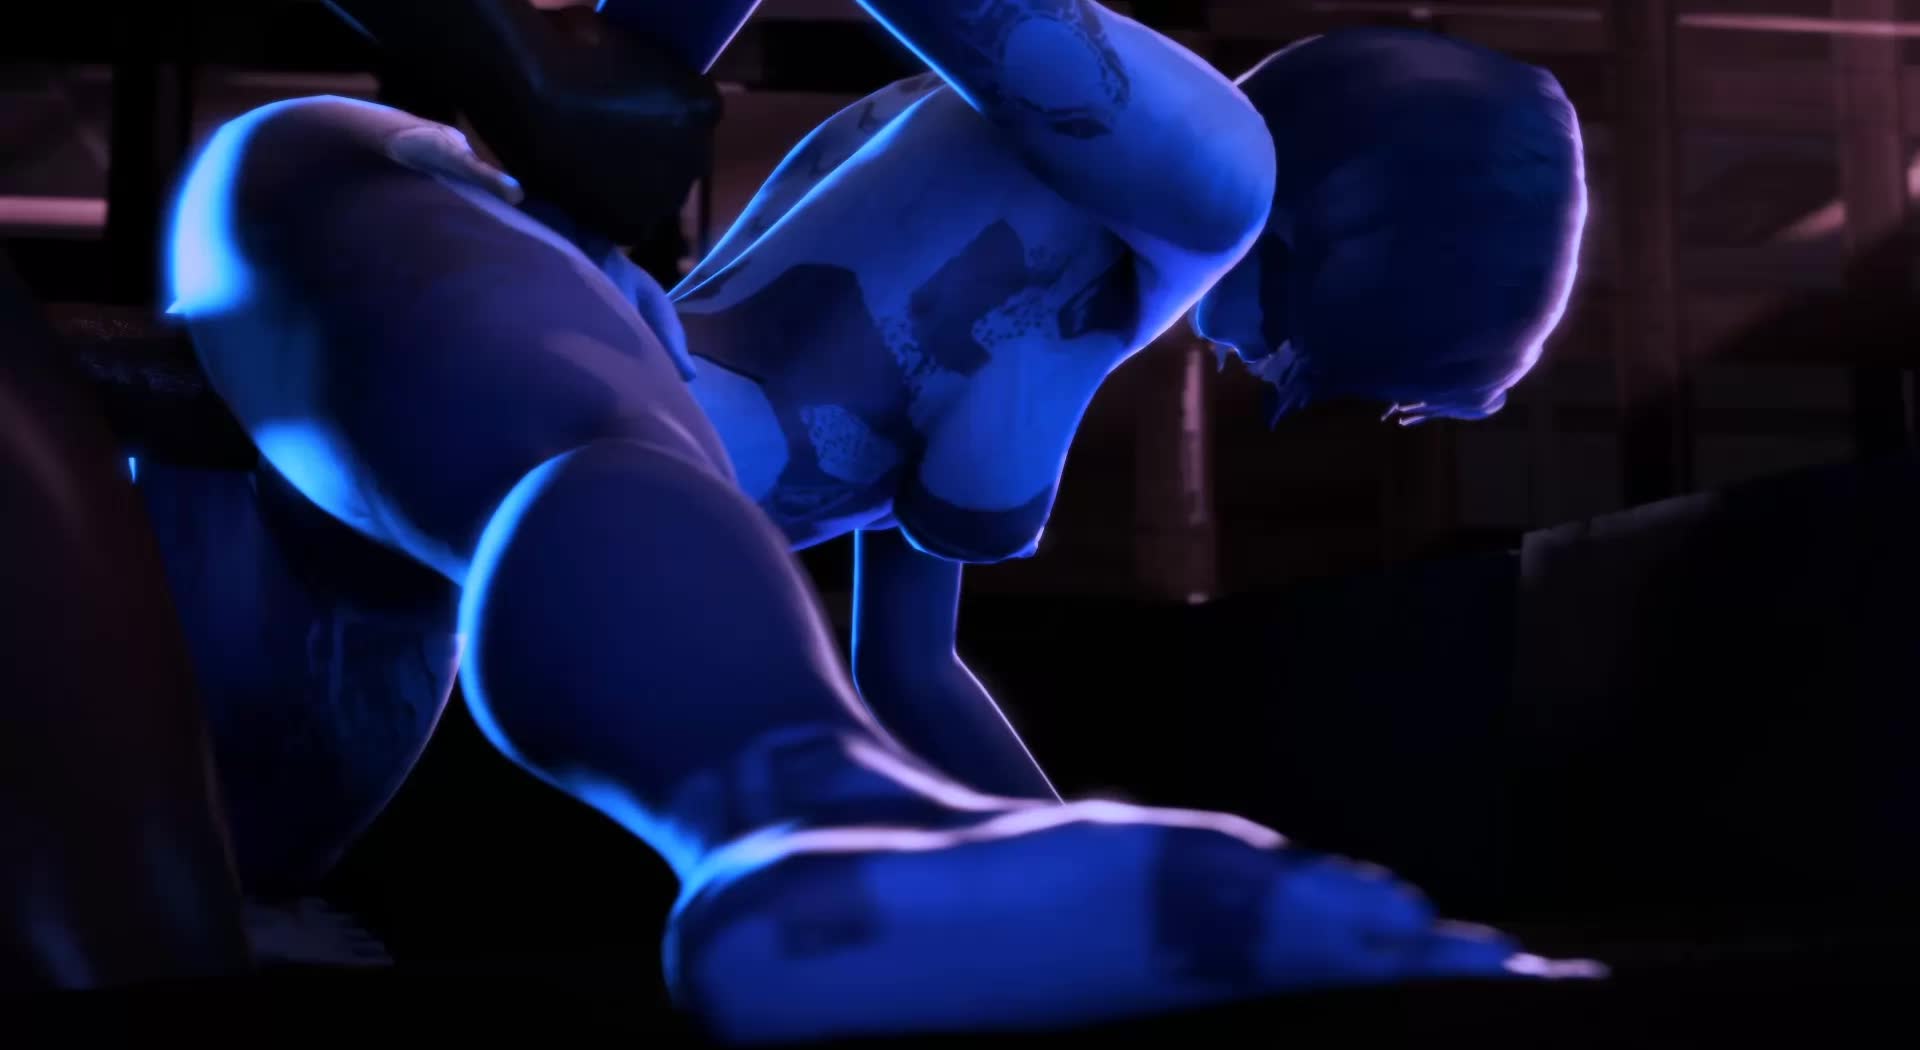 Cortana Gets Big Dick From Behind – Halo NSFW animation thumbnail